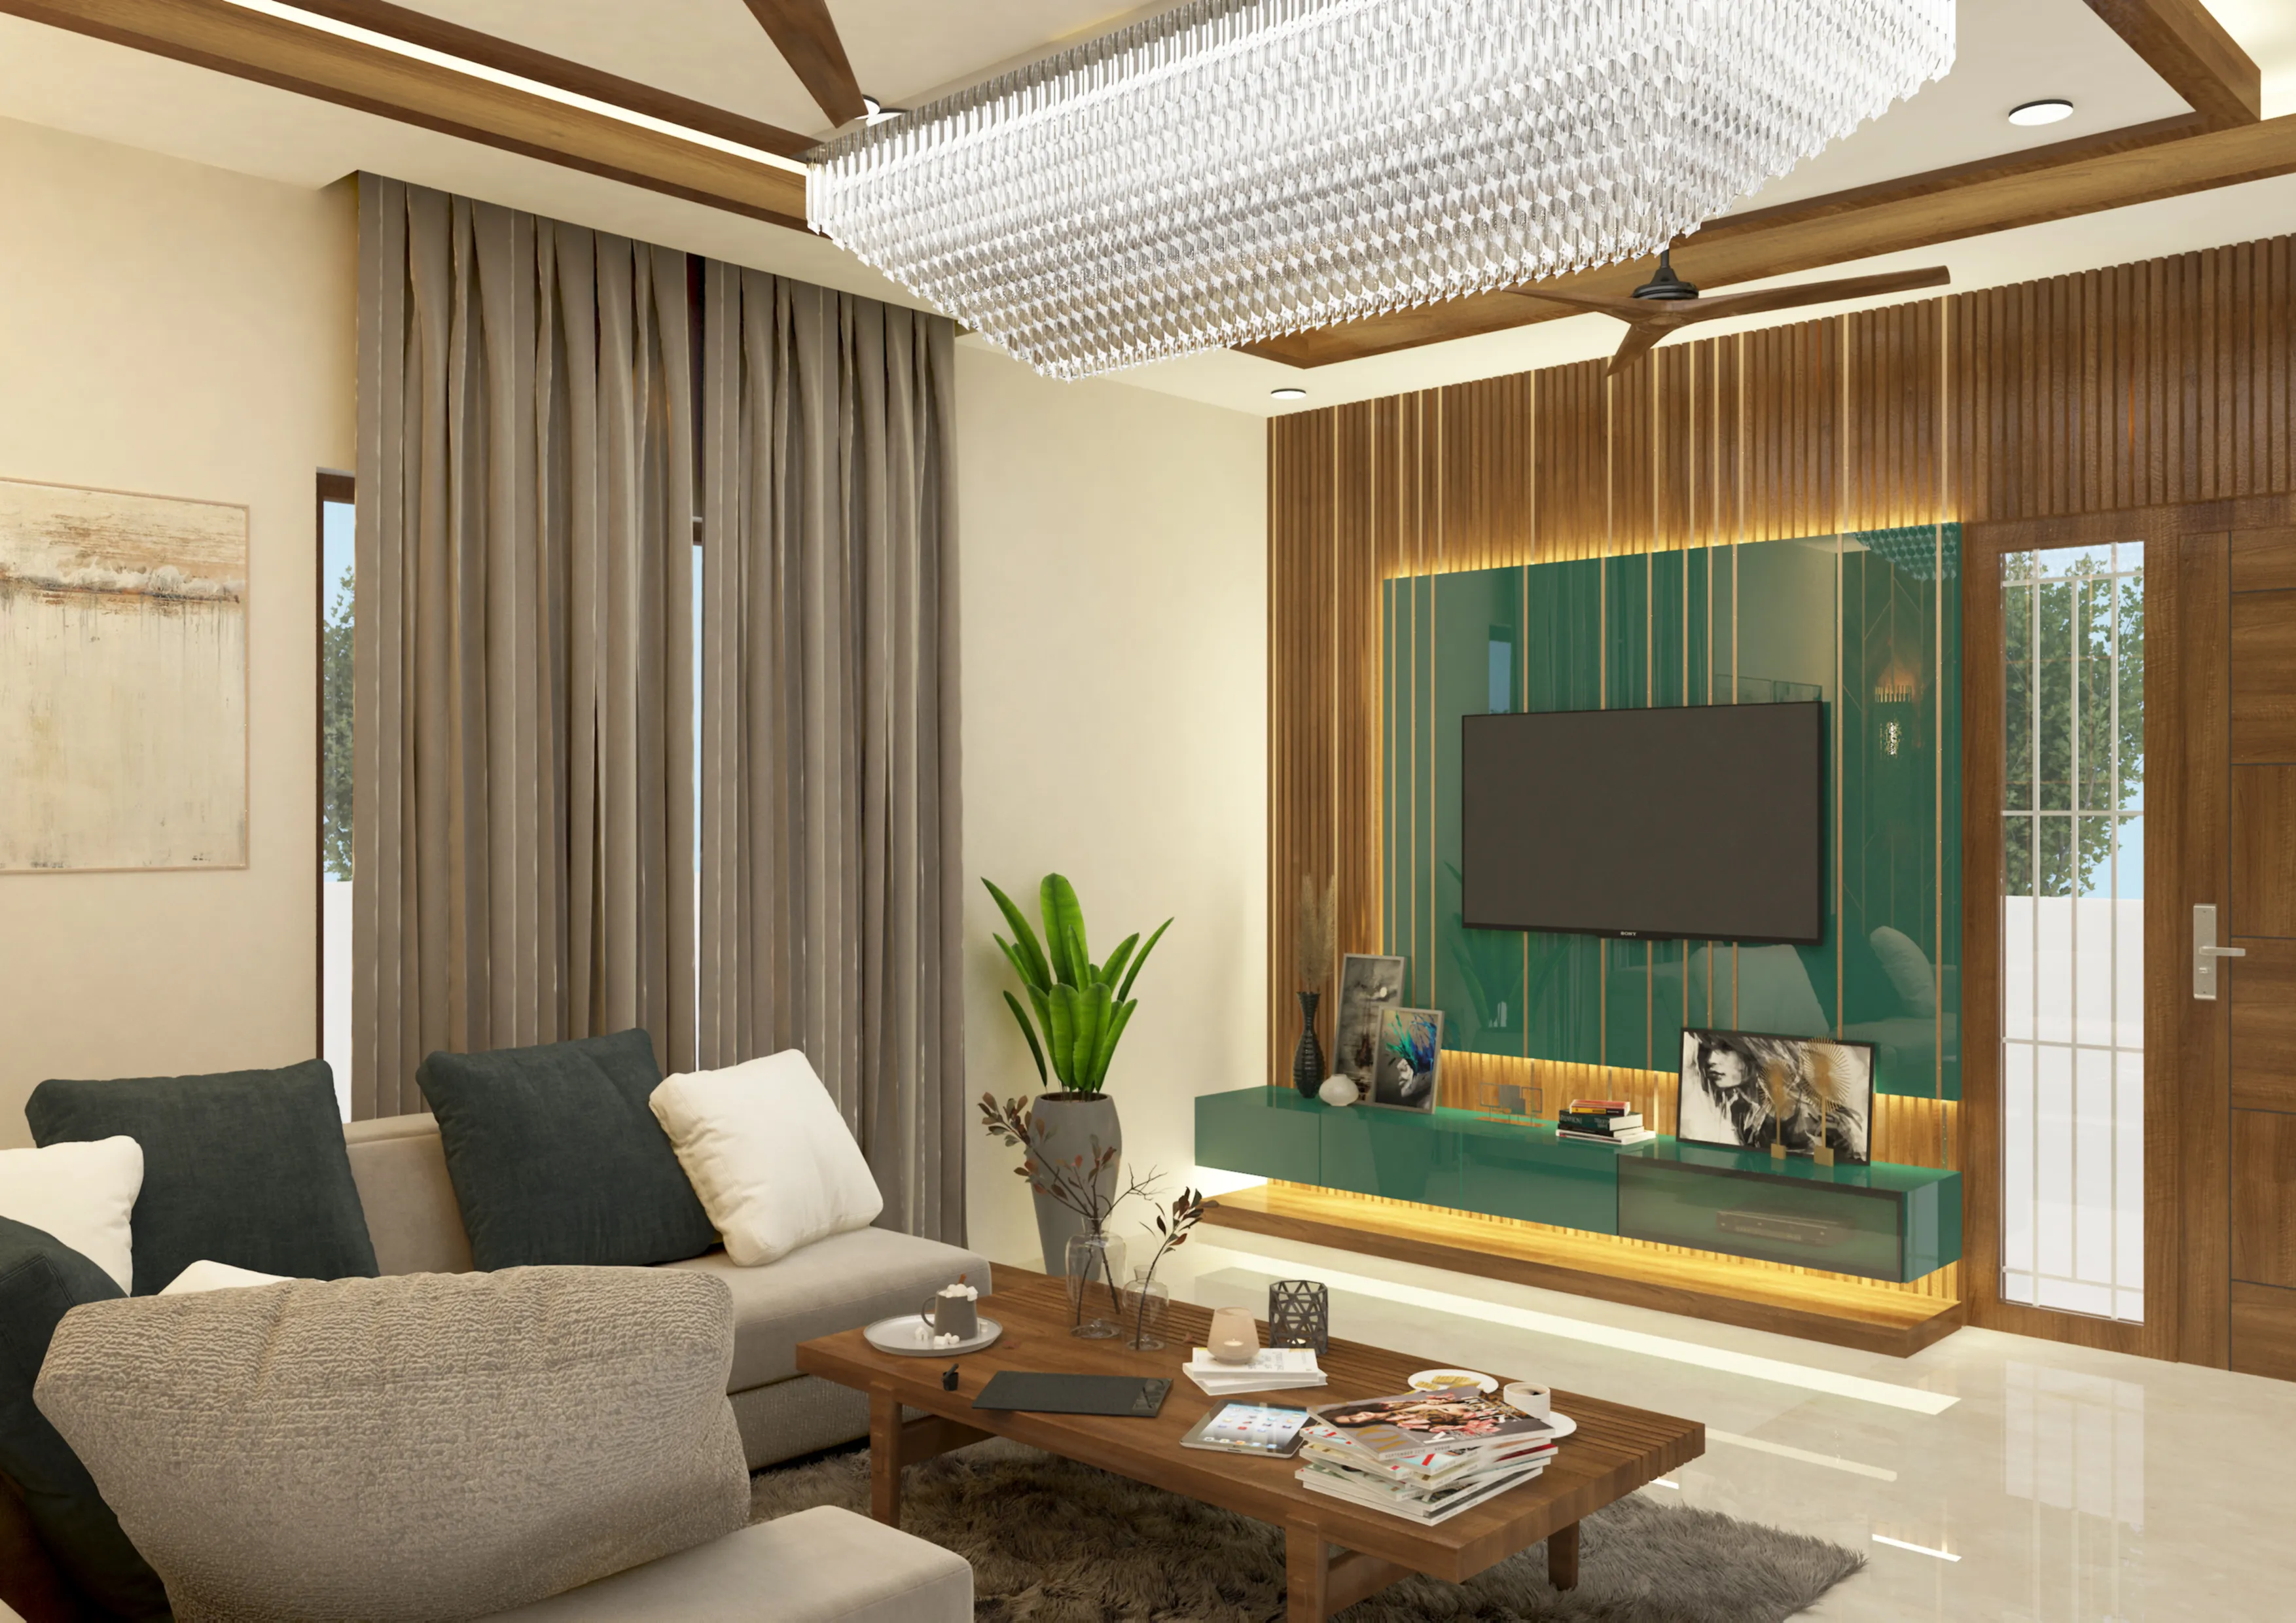 Living Room Interior Design Services For Home